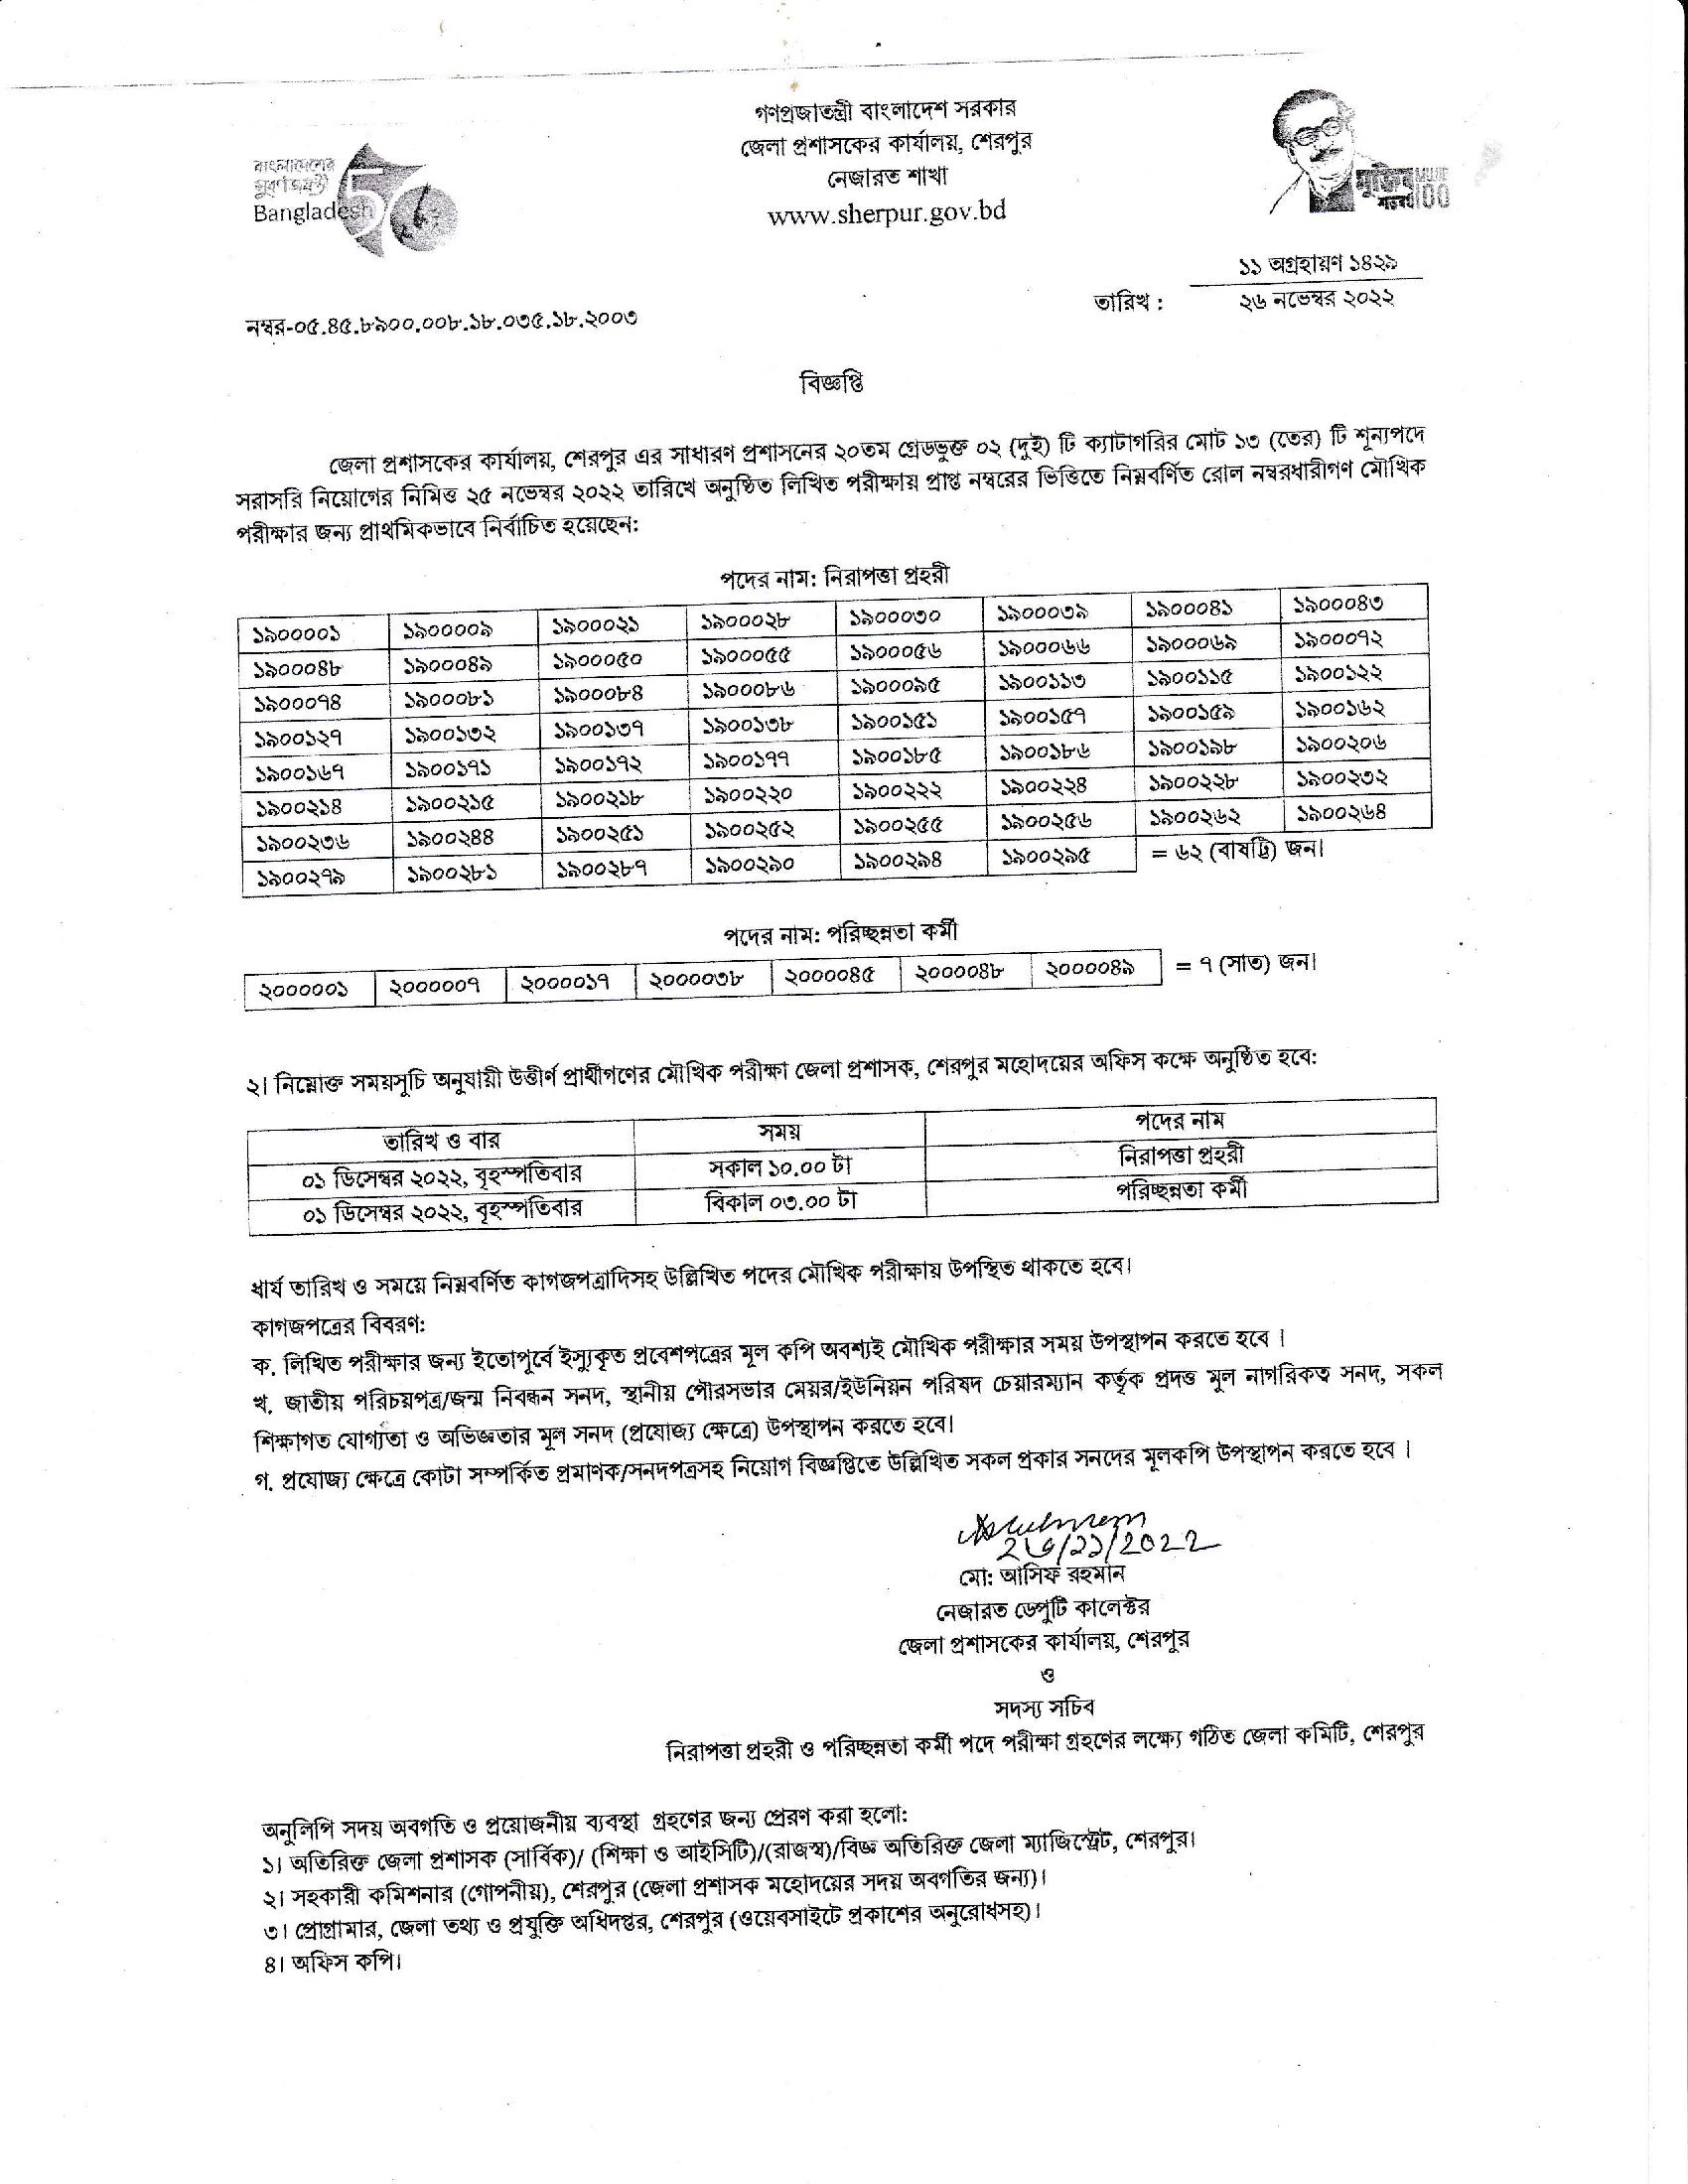 Sherpur DC Office Exam result 2022